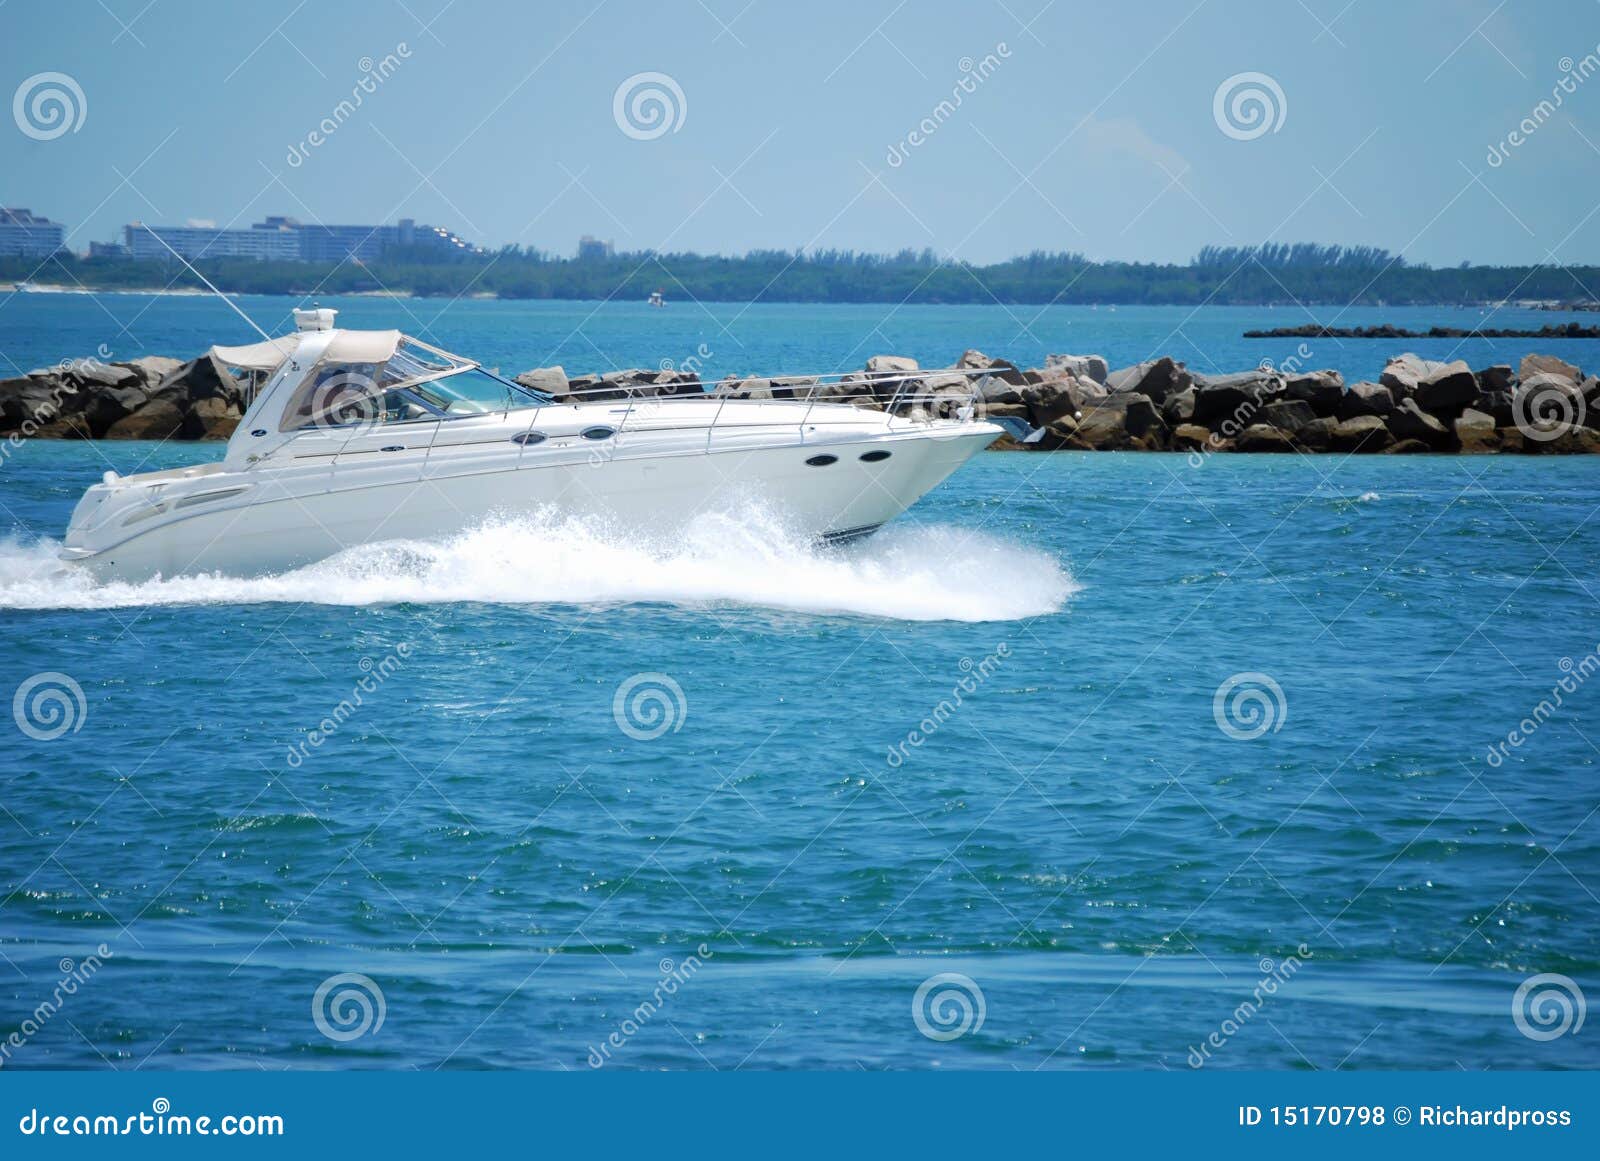 White Sport Fishing Boat Royalty Free Stock Photos - Image: 15170798